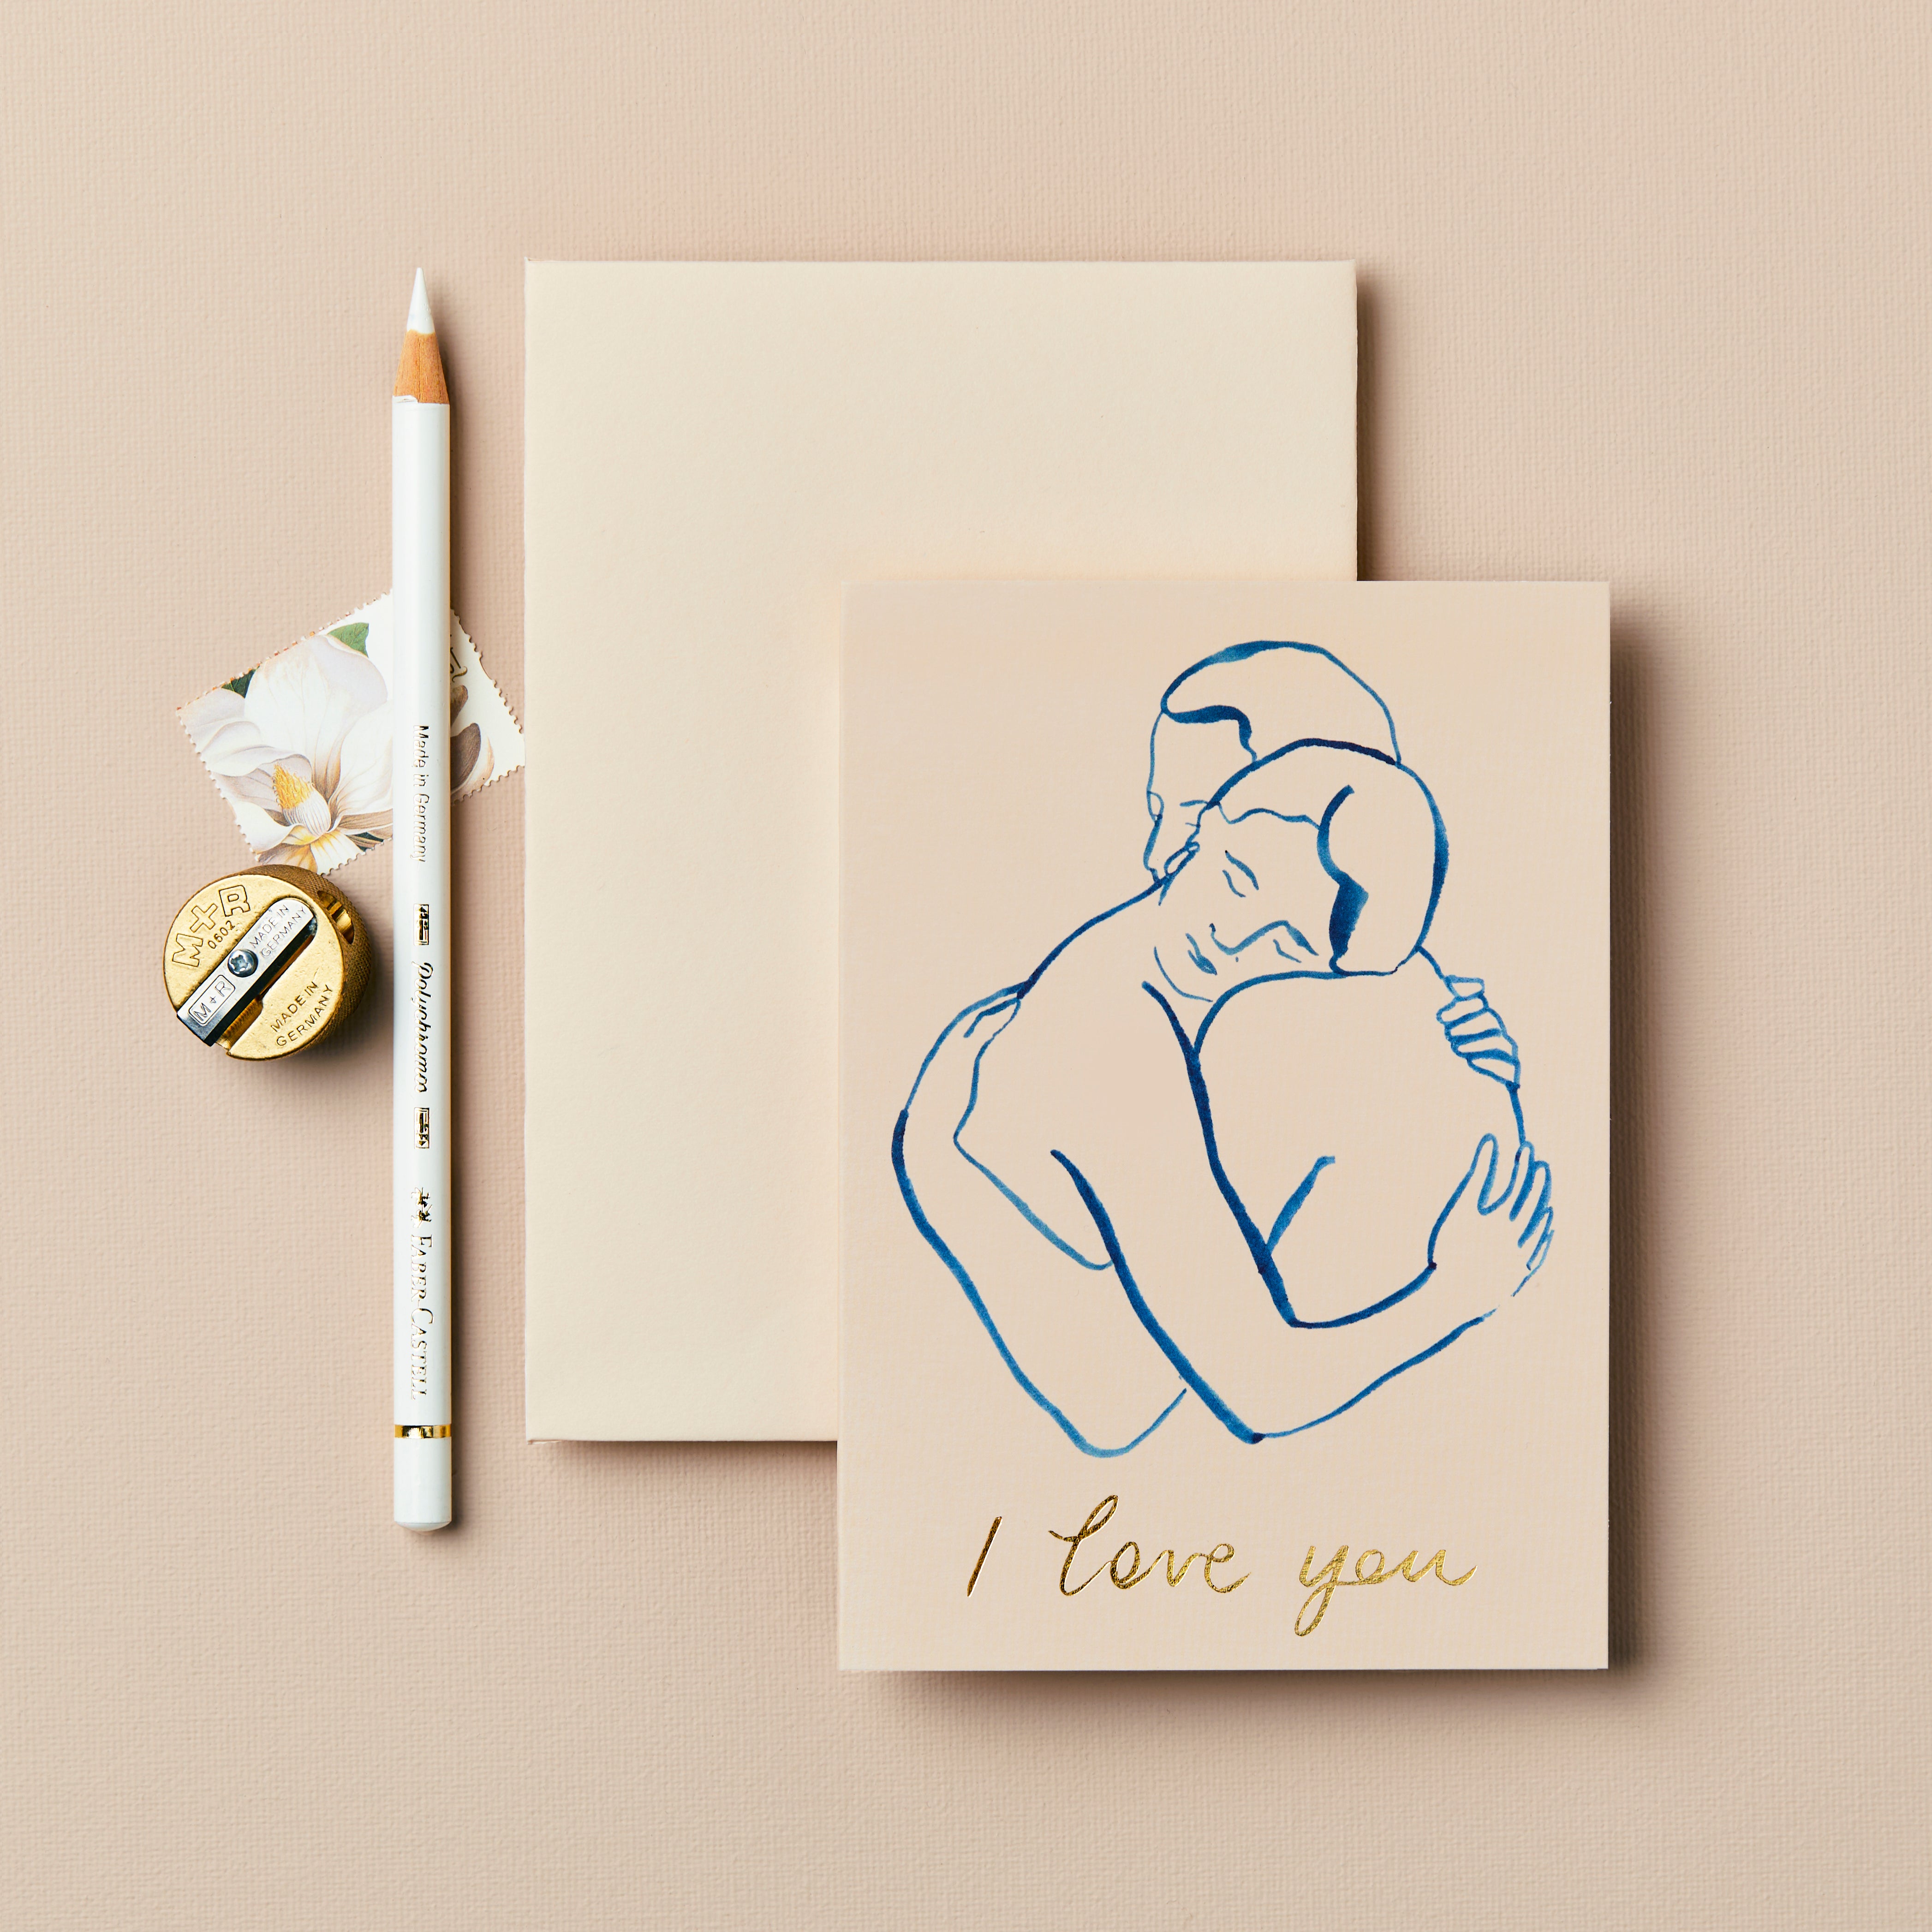 'I Love You' Figures Greetings Card